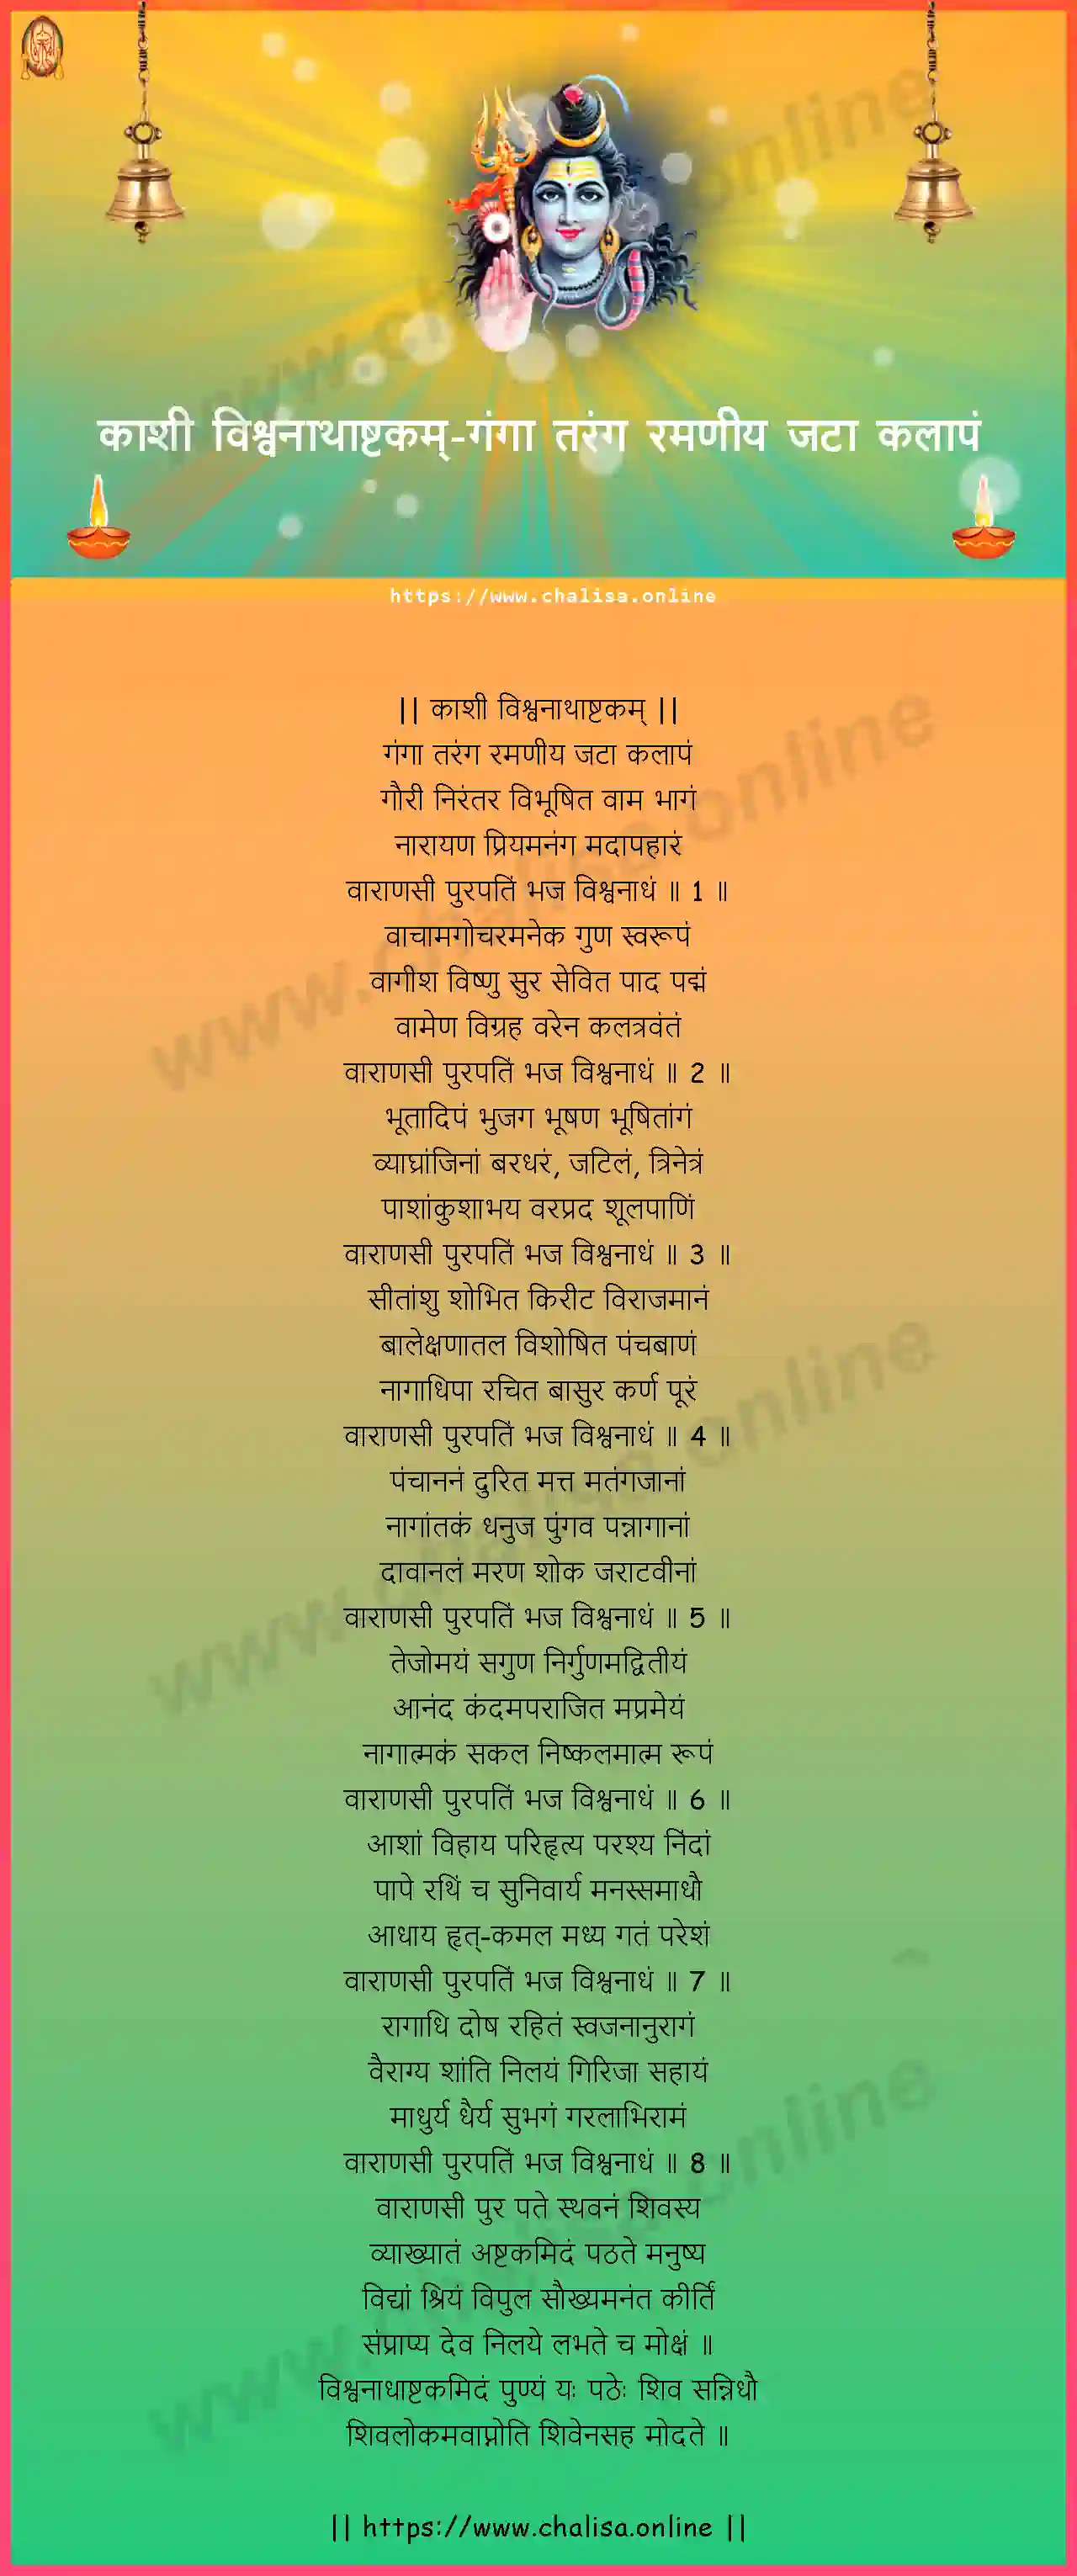 ganga-taranga-kasi-vishwanathashtakam-marathi-marathi-lyrics-download